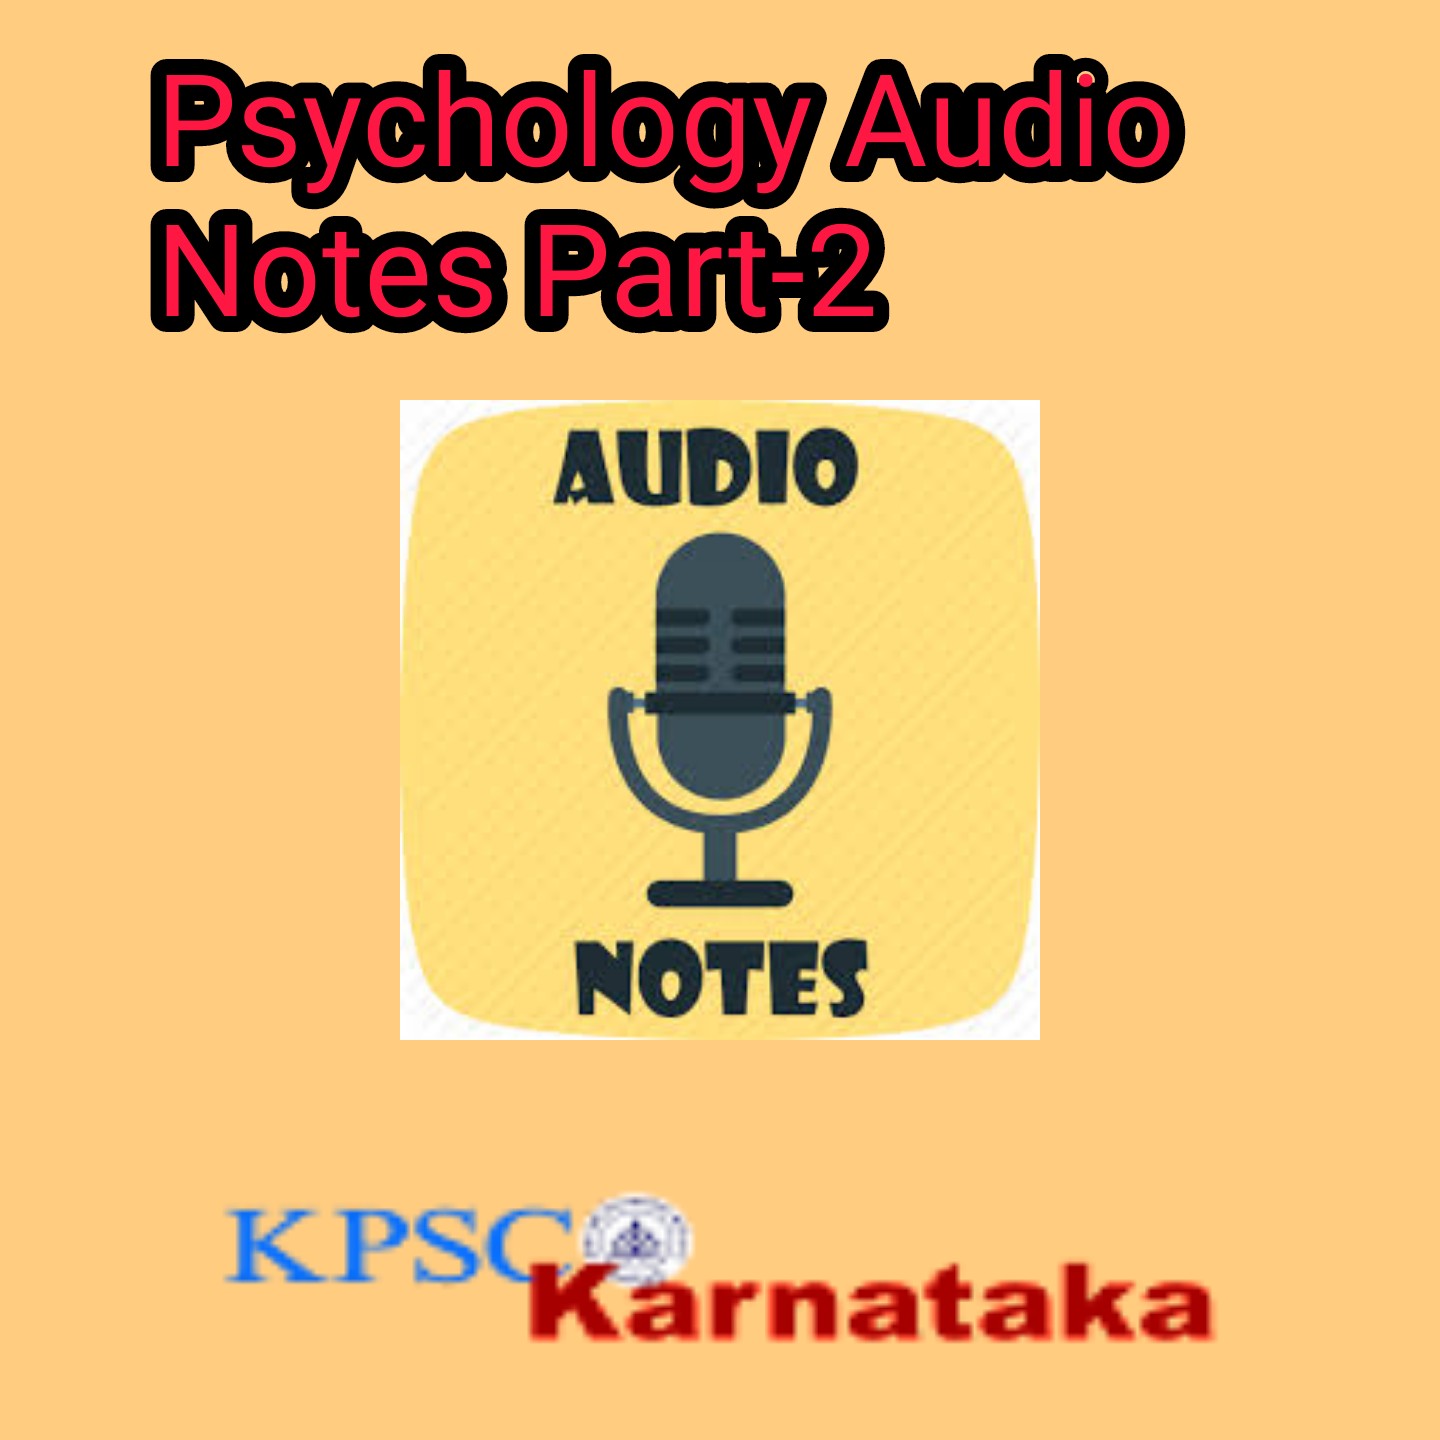 Psychology Audio Notes Part-2